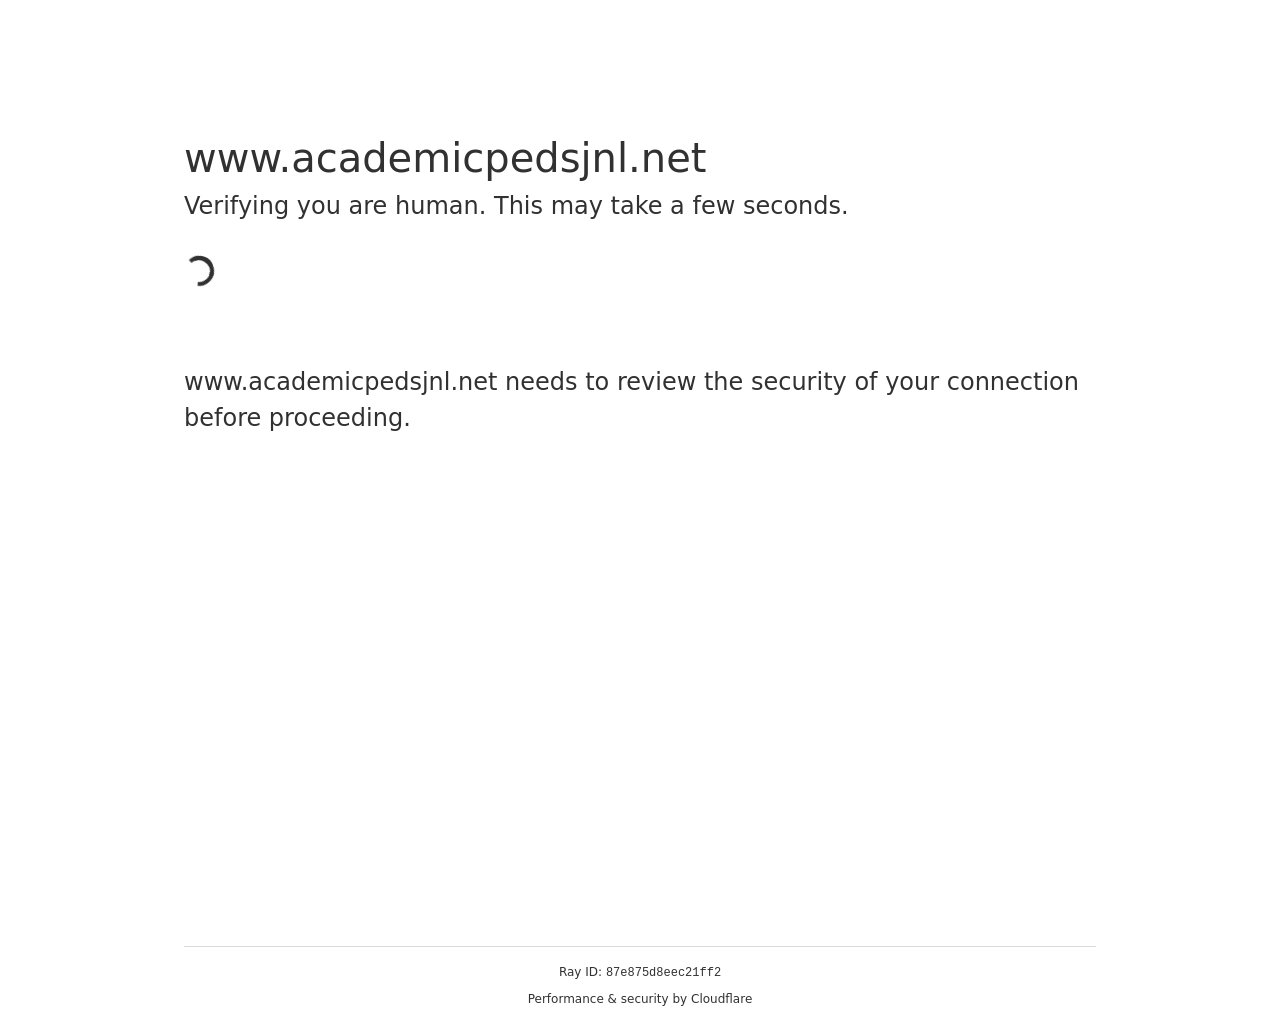 academicpedsjnl.net